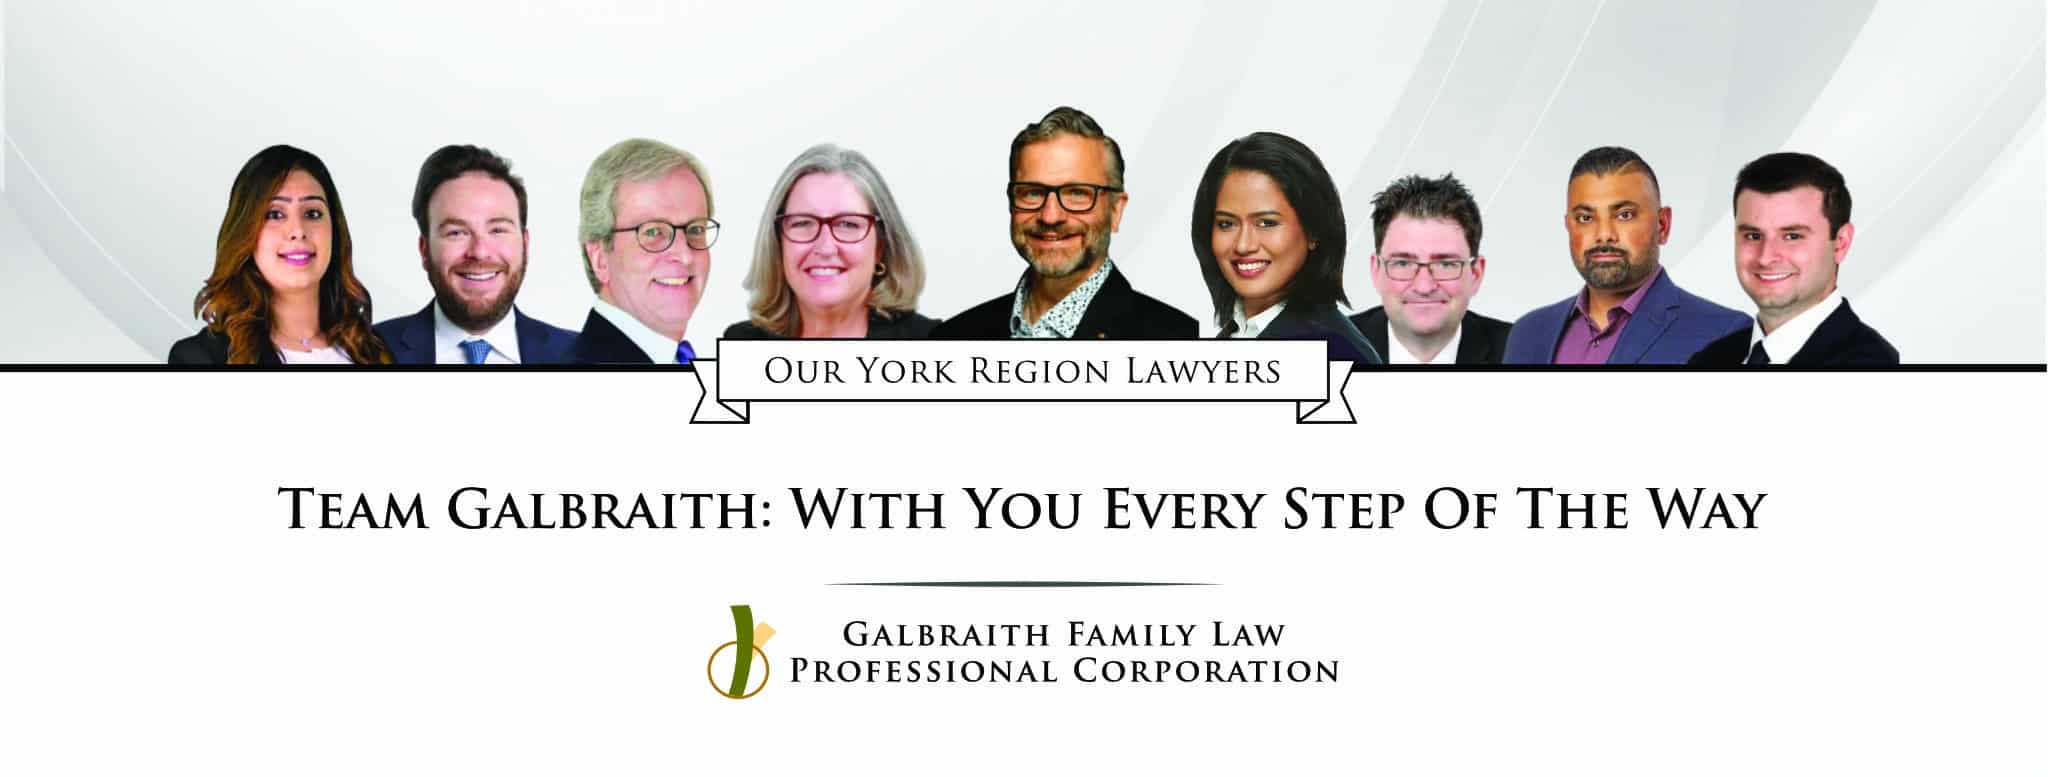 TeamGalbraith_York-Region-lawyers-2024-01